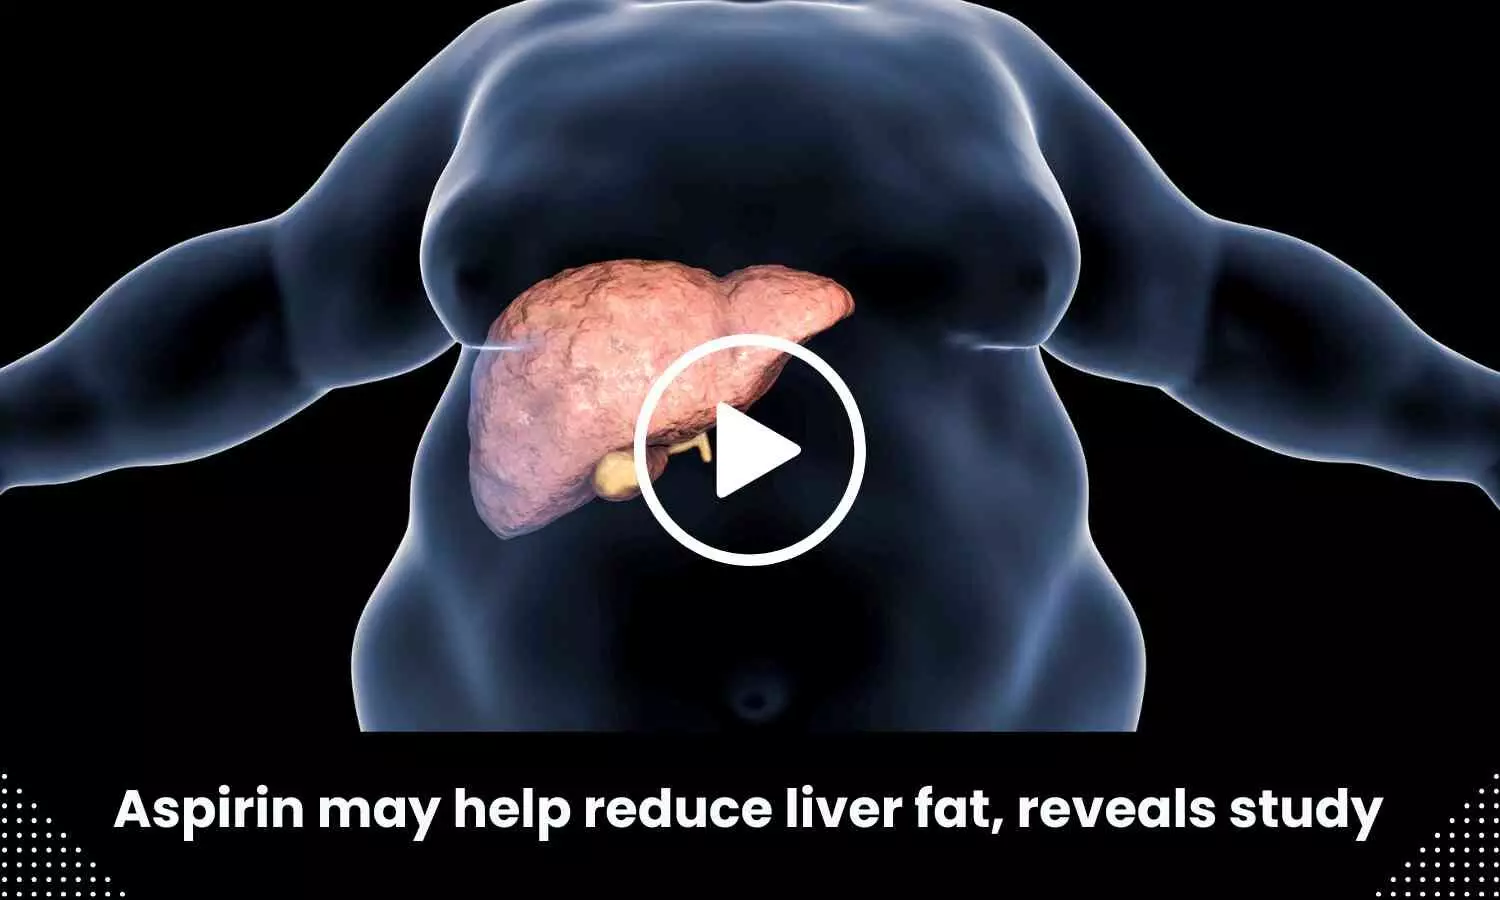 Aspirin may help reduce liver fat, reveals study